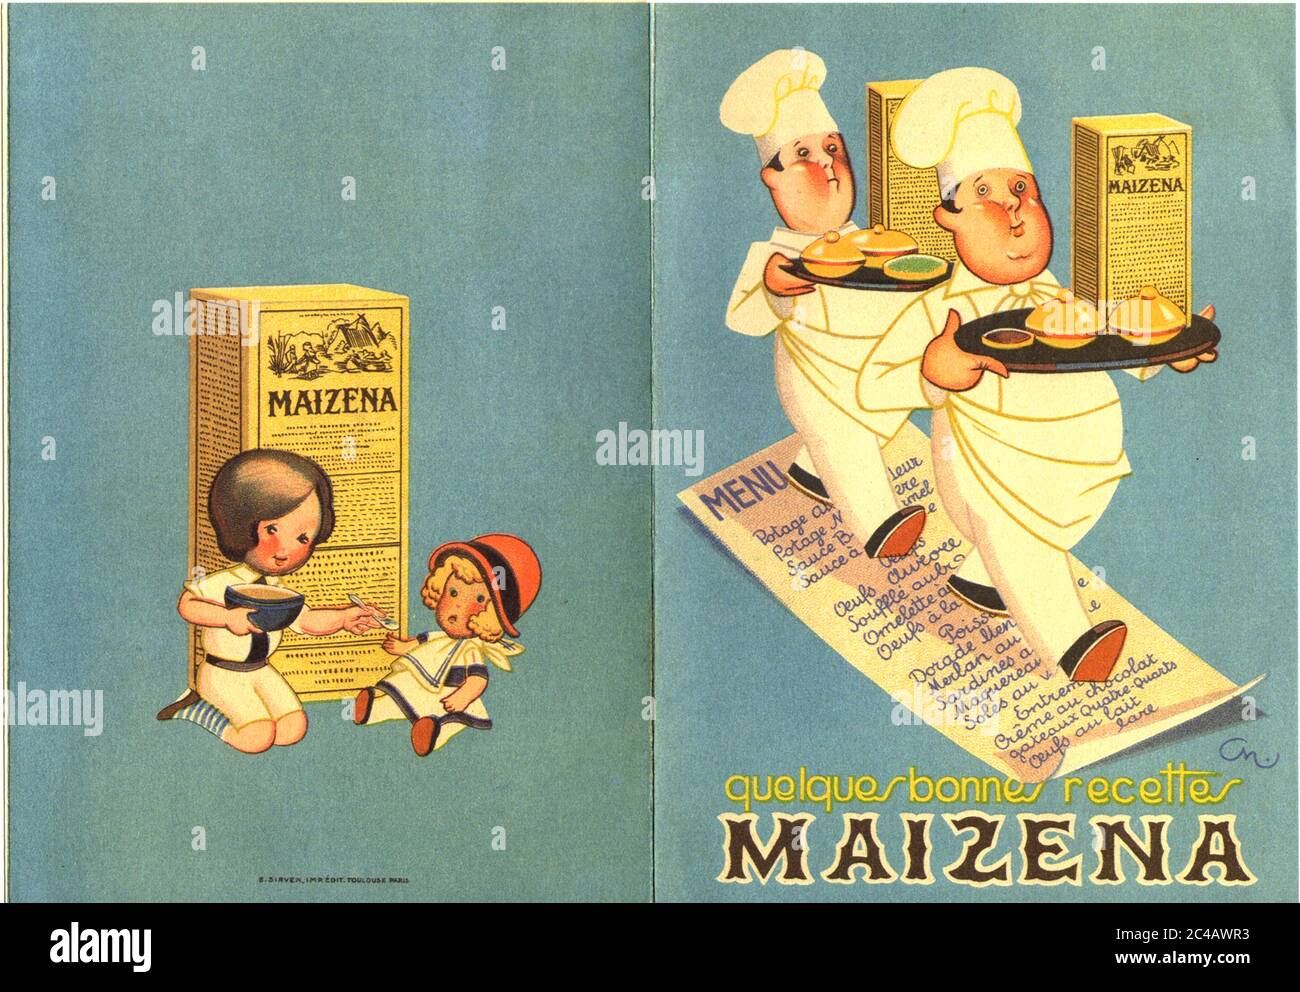 Fascicule Maizena recettes vers 1955 / Maizena booklet recipes around 1955 Stock Photo